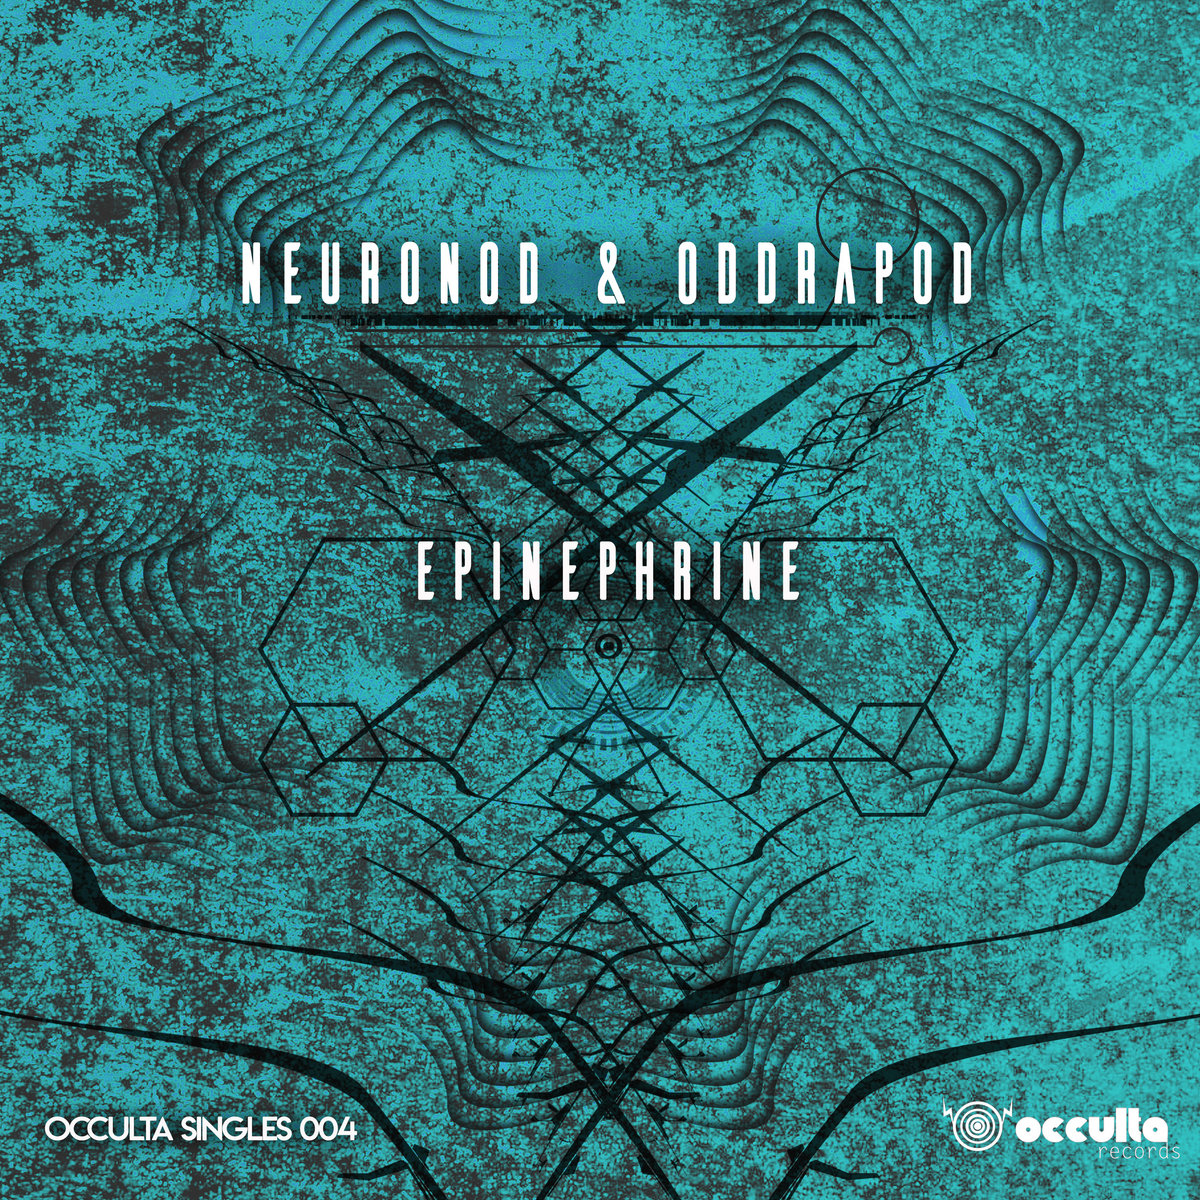 Neuronod and Oddrapod - Epinephrine